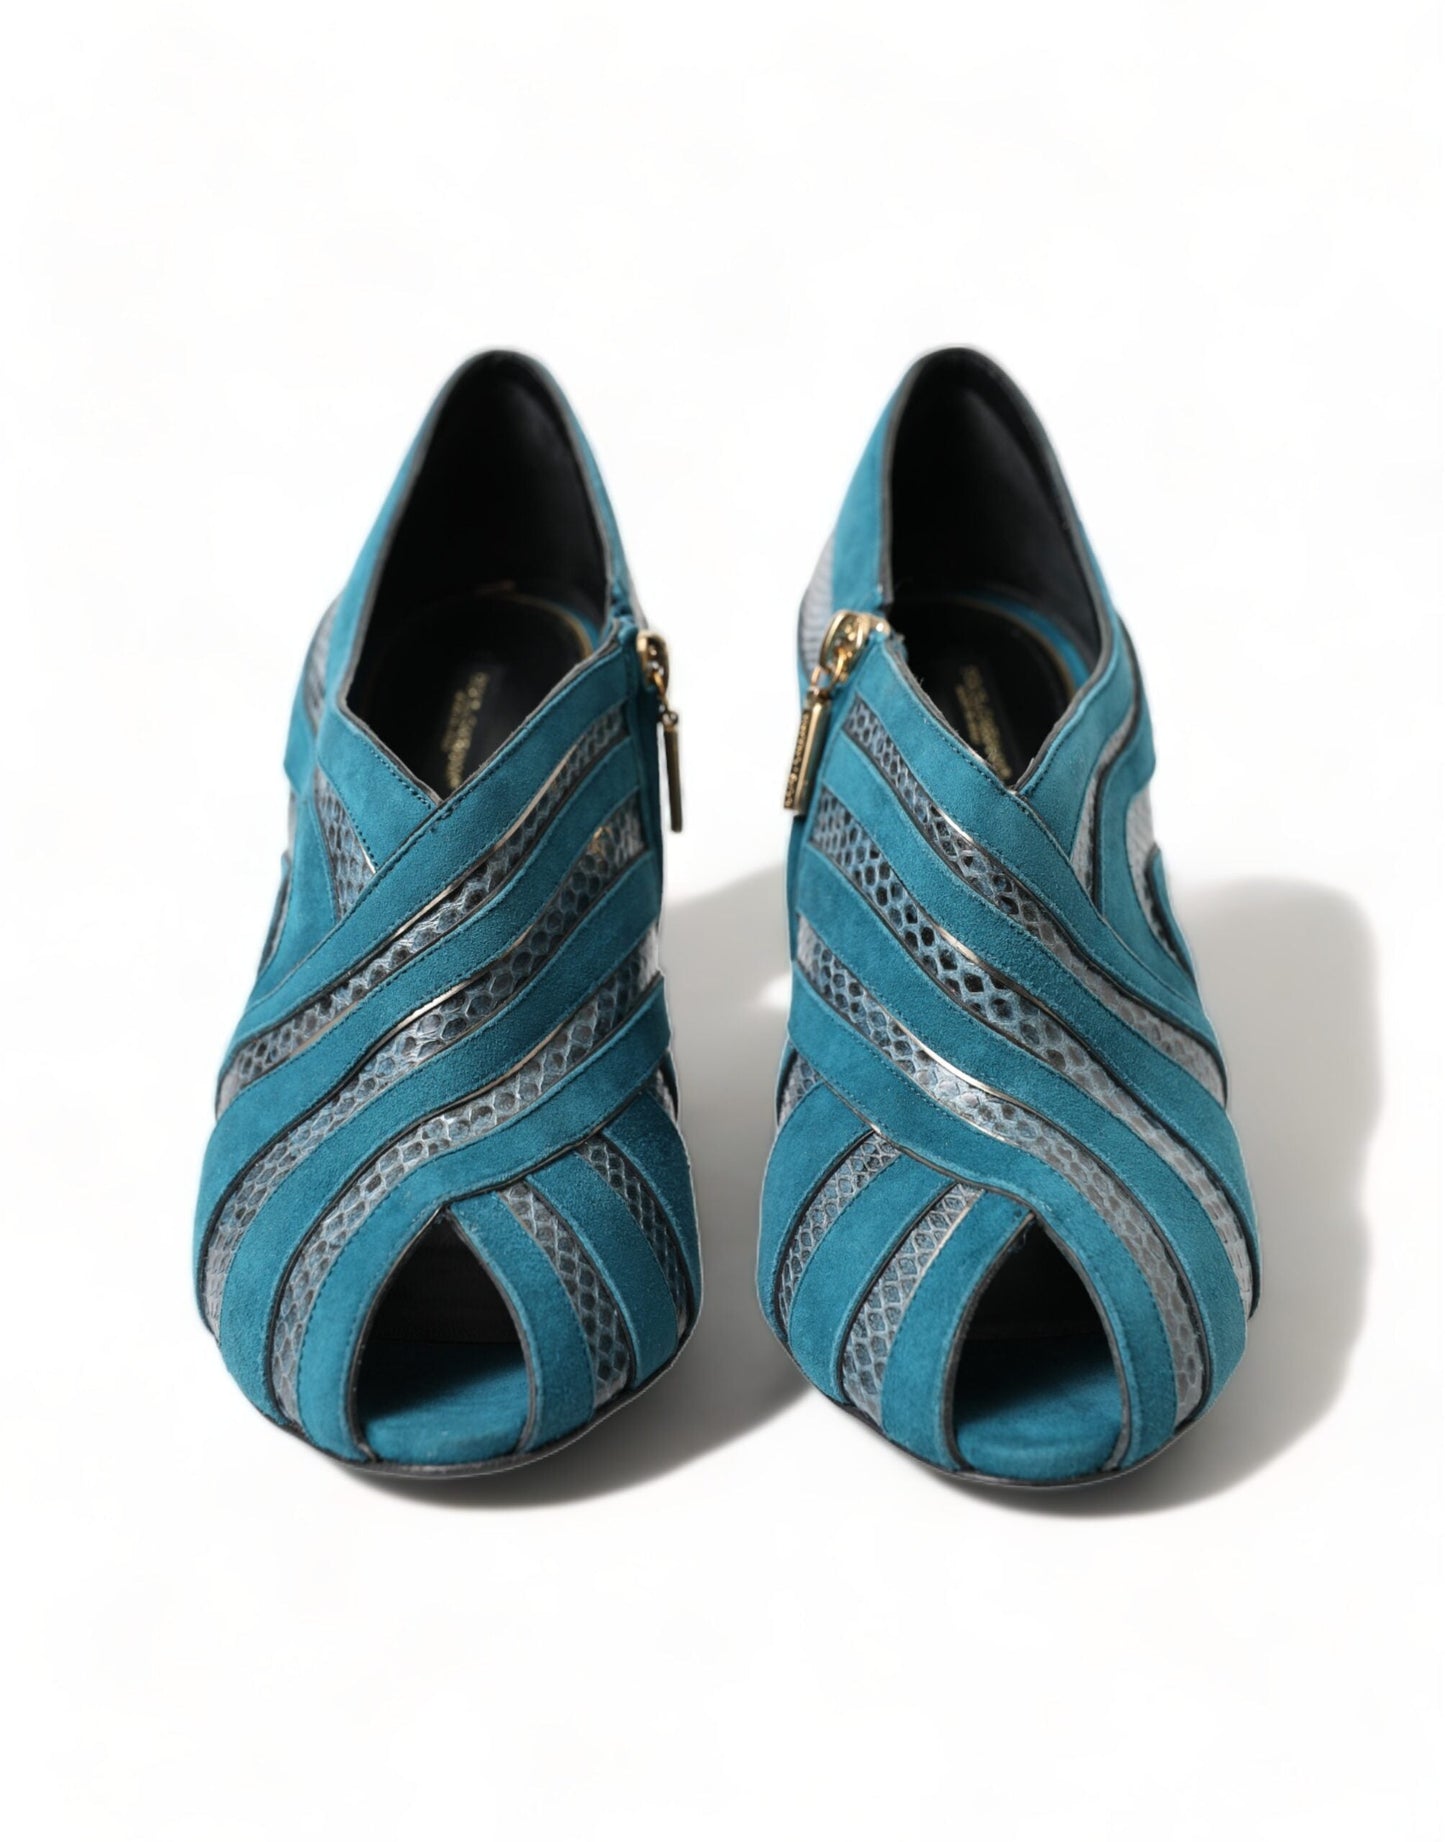 Dolce & Gabbana Teal Suede Leather Peep Toe Heels | Fashionsarah.com